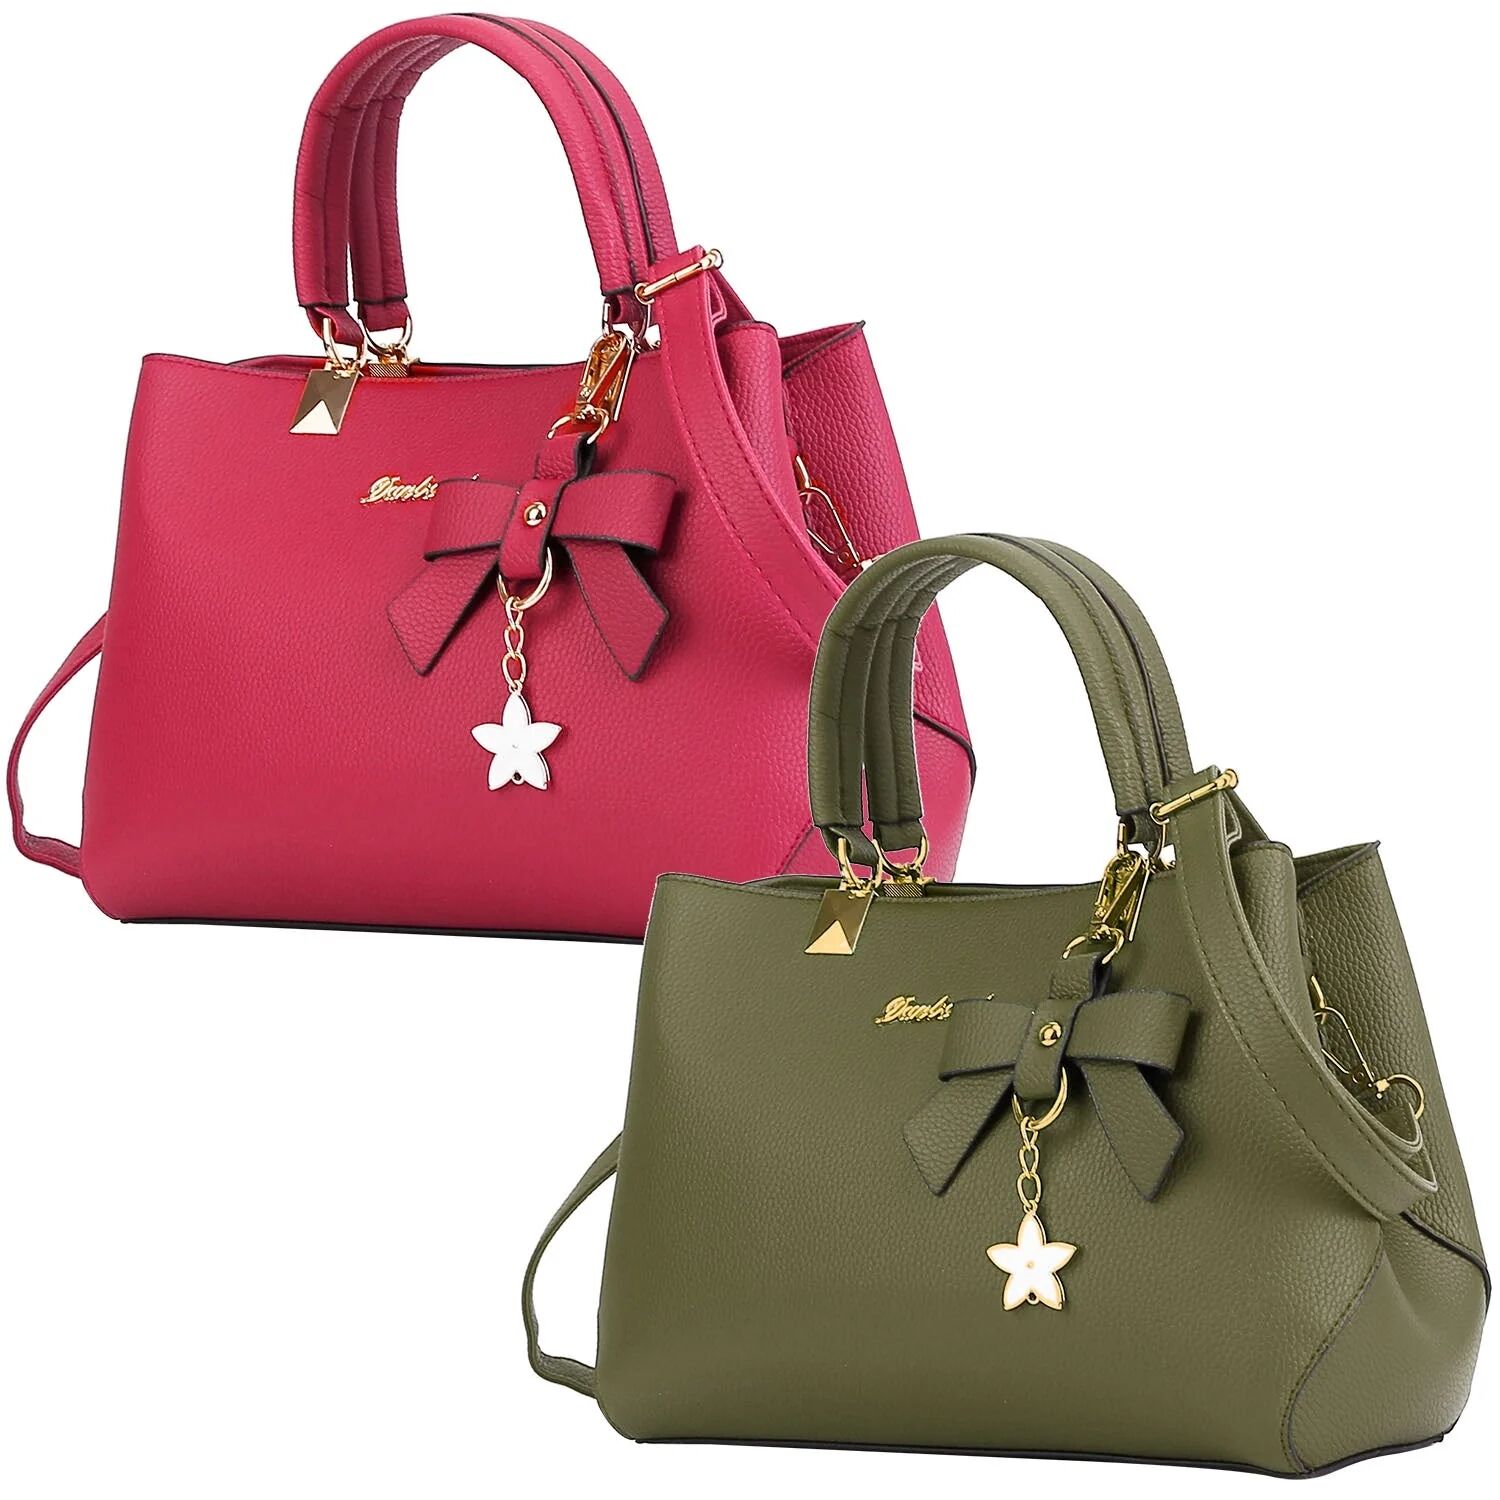 DailySale Womens Soft Leather Handbag Tote Shoulder Crossbody Bag